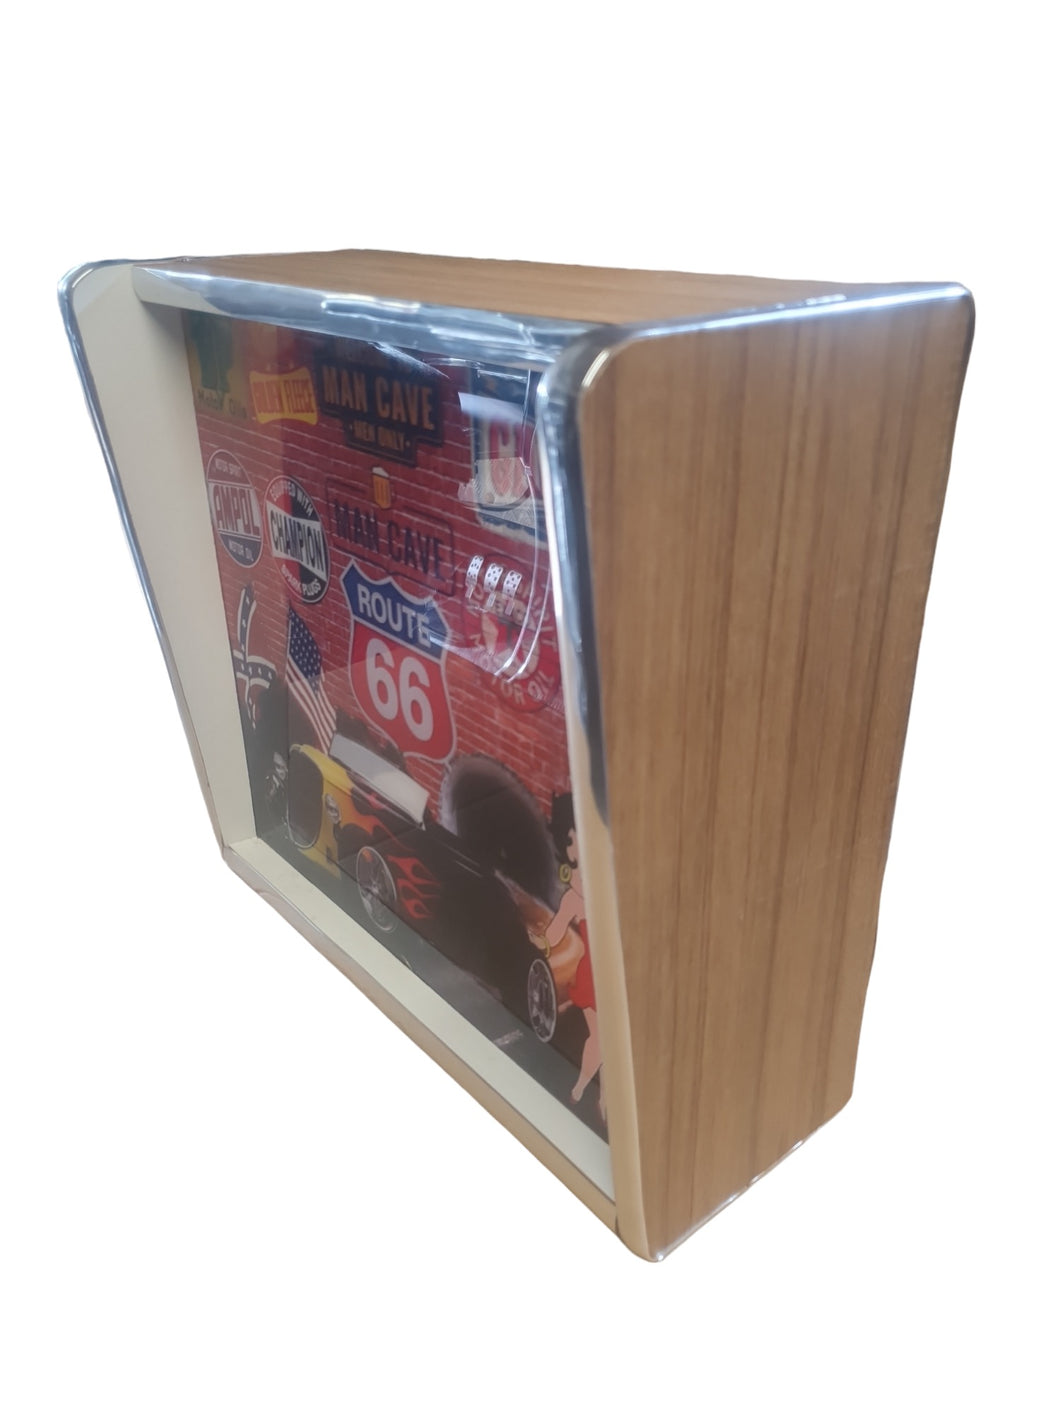 Route 66 Pinball Head LED Display light box with woodgrain